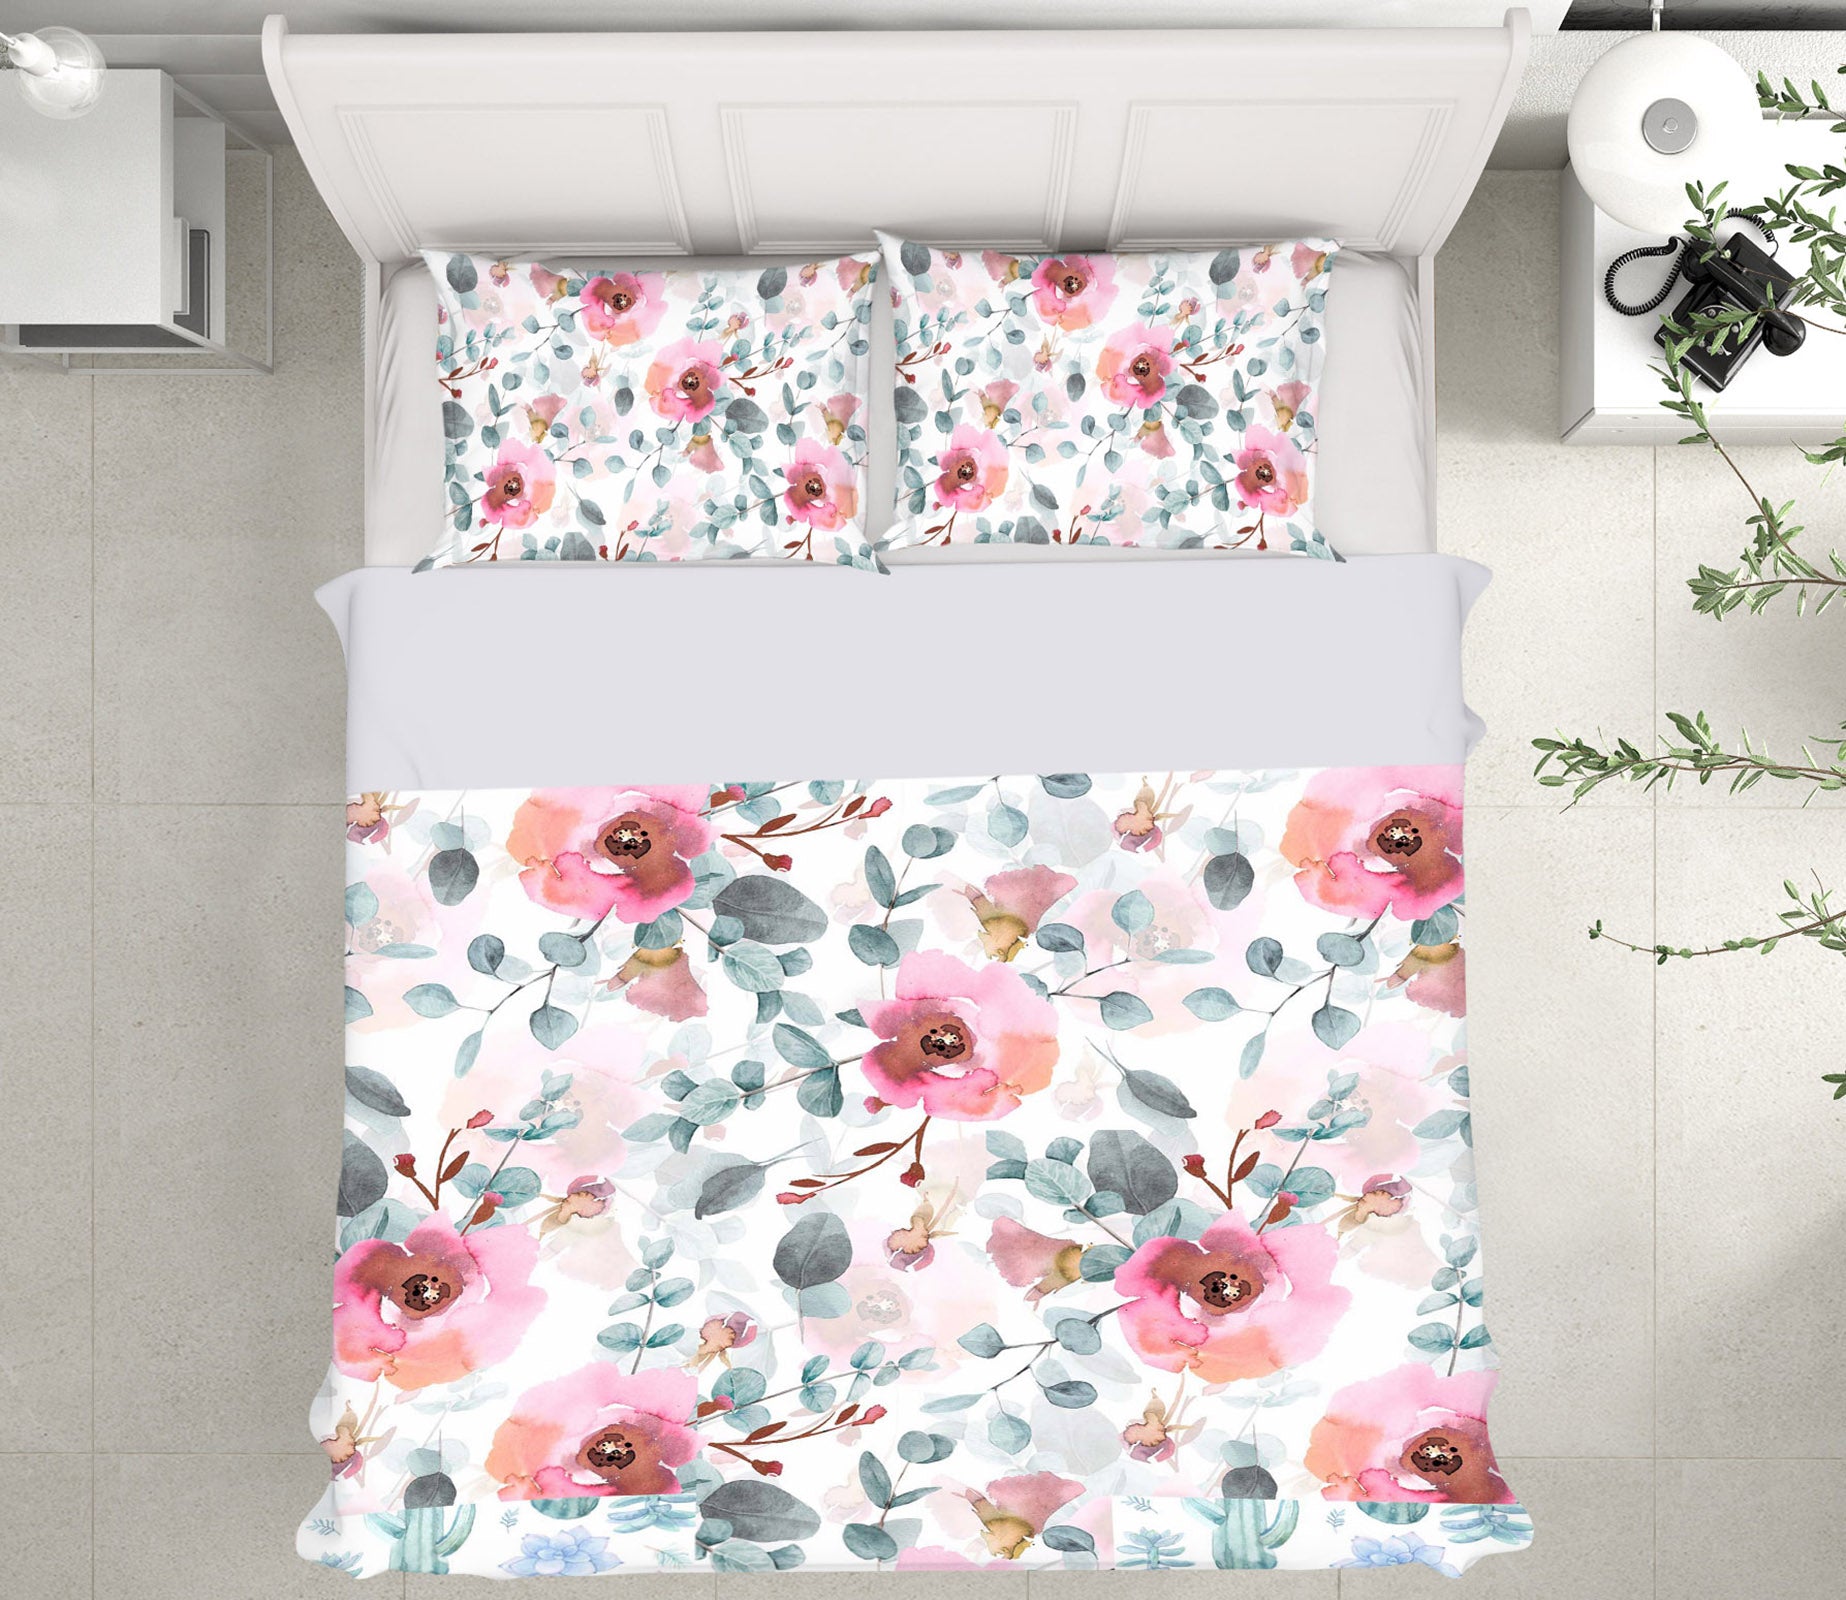 3D Leaves Flower 086 Uta Naumann Bedding Bed Pillowcases Quilt